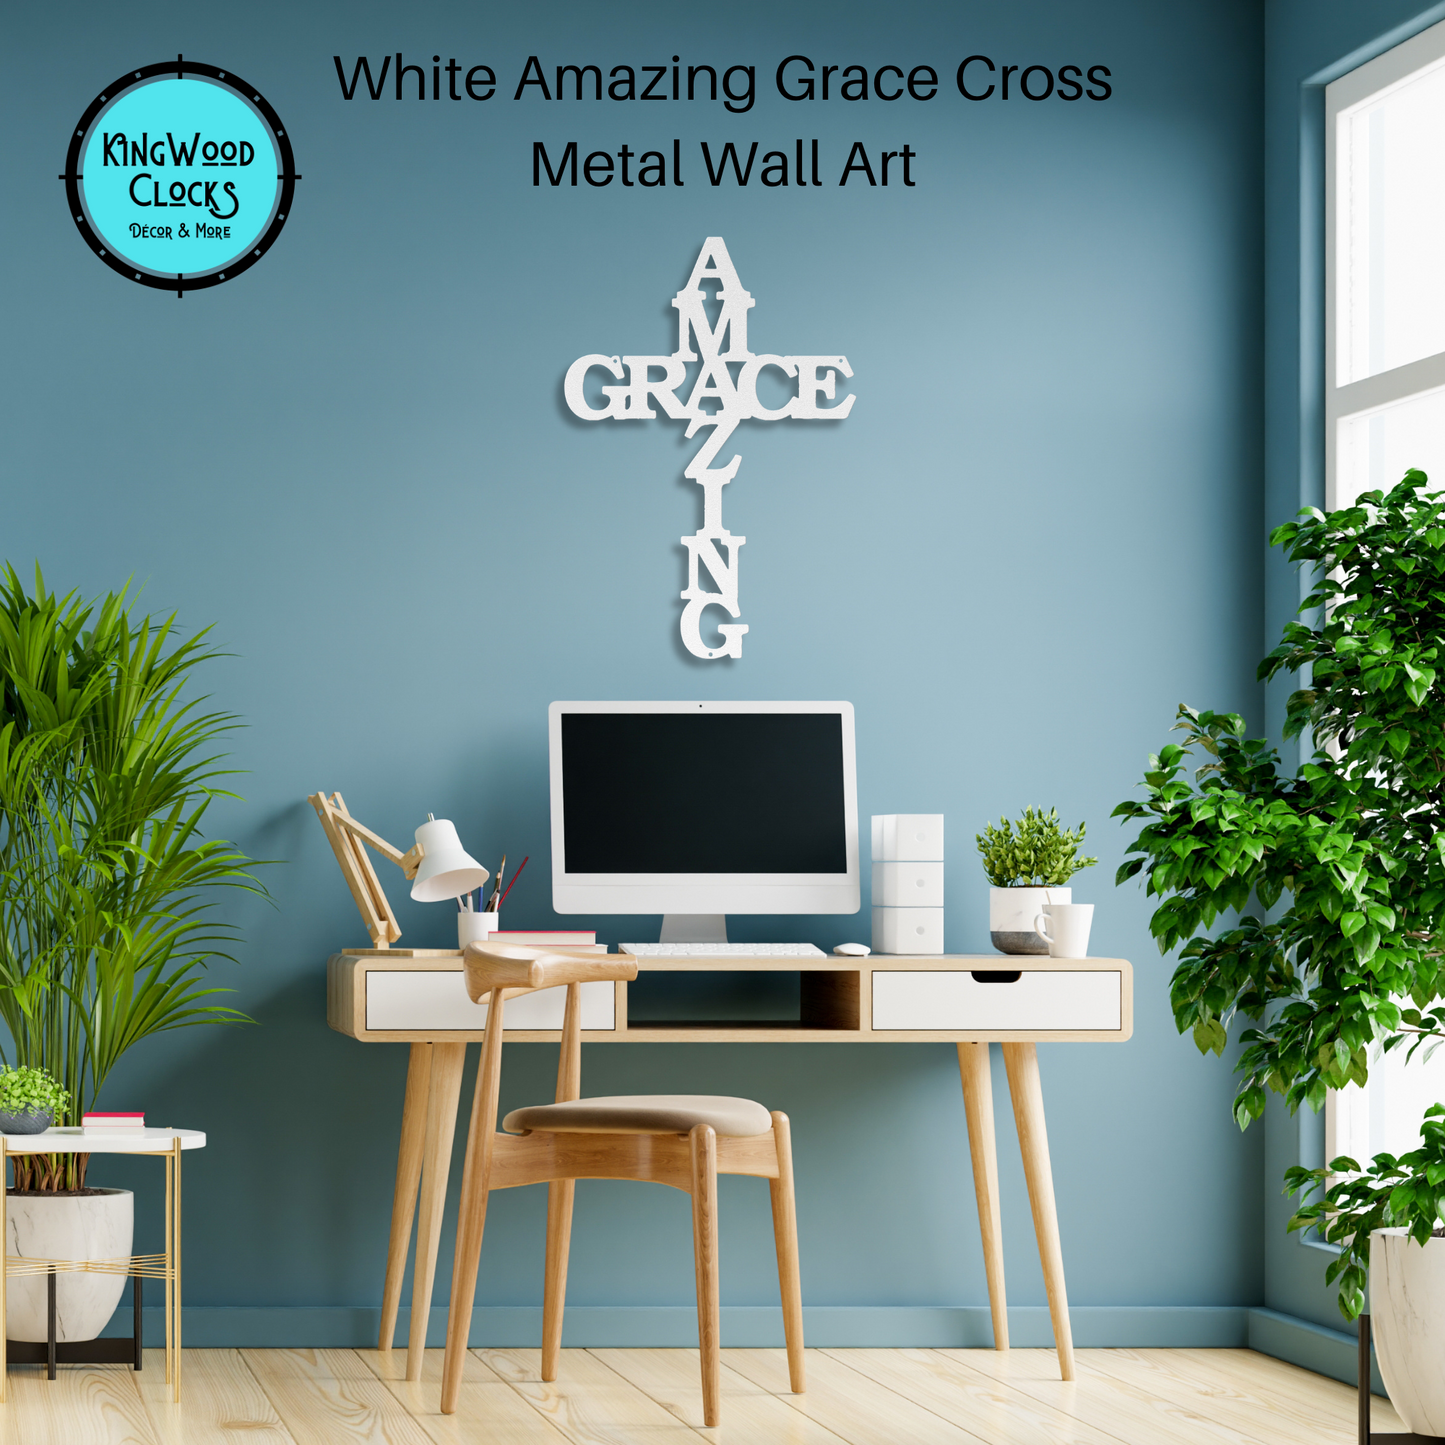 Amazing Grace Cross Metal Wall Art white over desk in office space